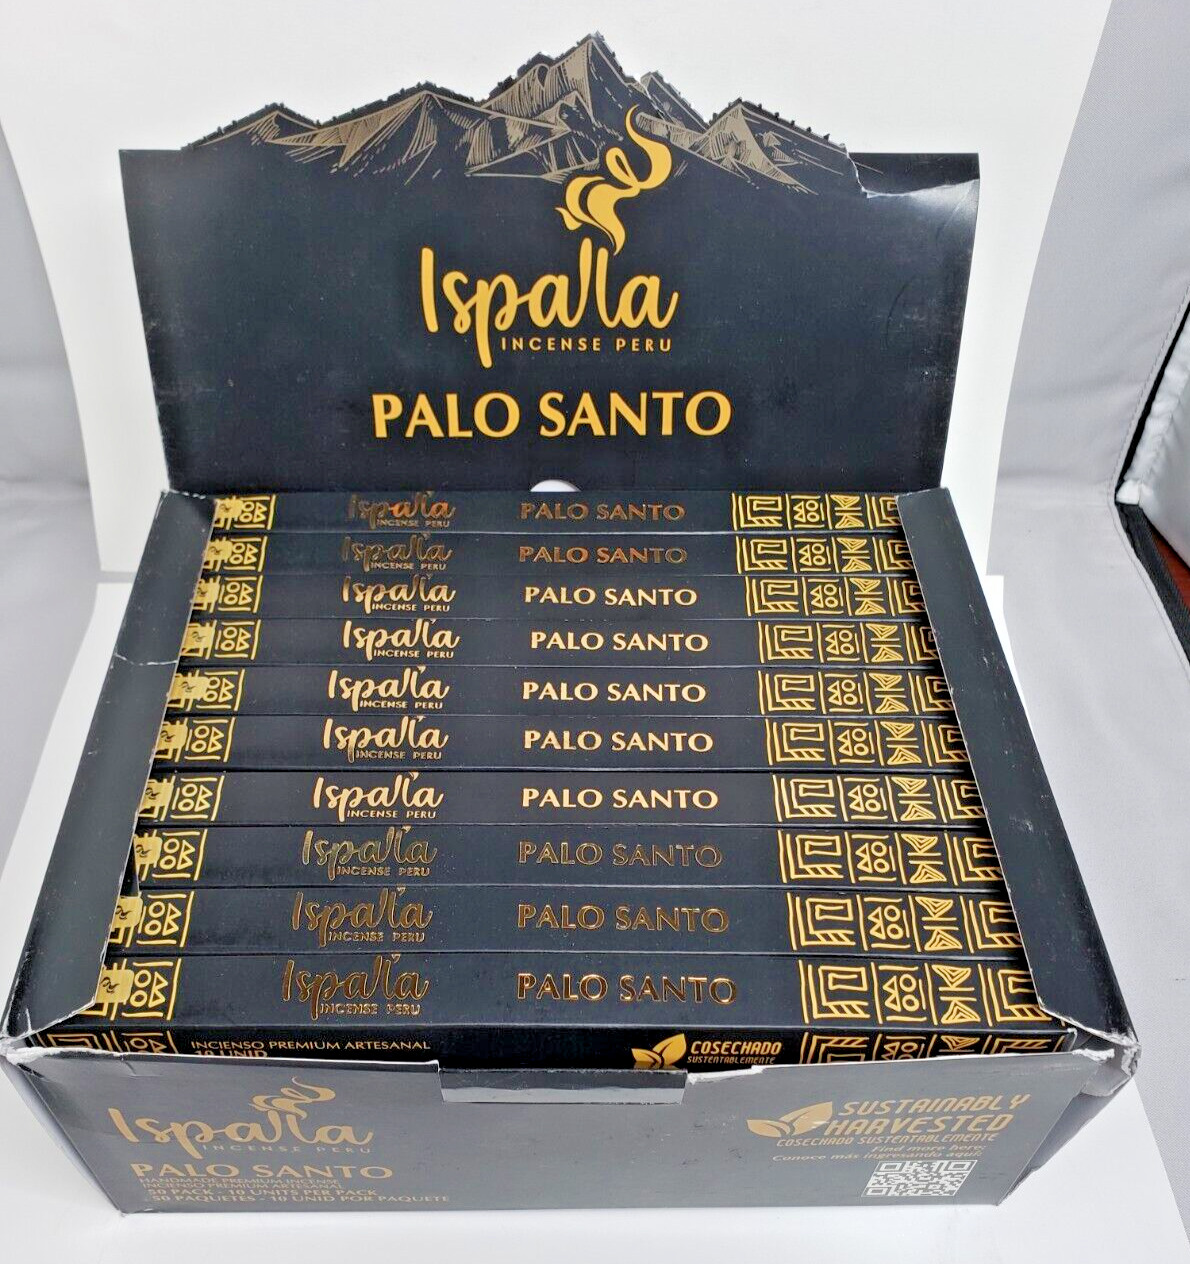 New Case of 50 Packs Ispalla Palo Santo Sticks 500 Total Cleansing Peru Incense